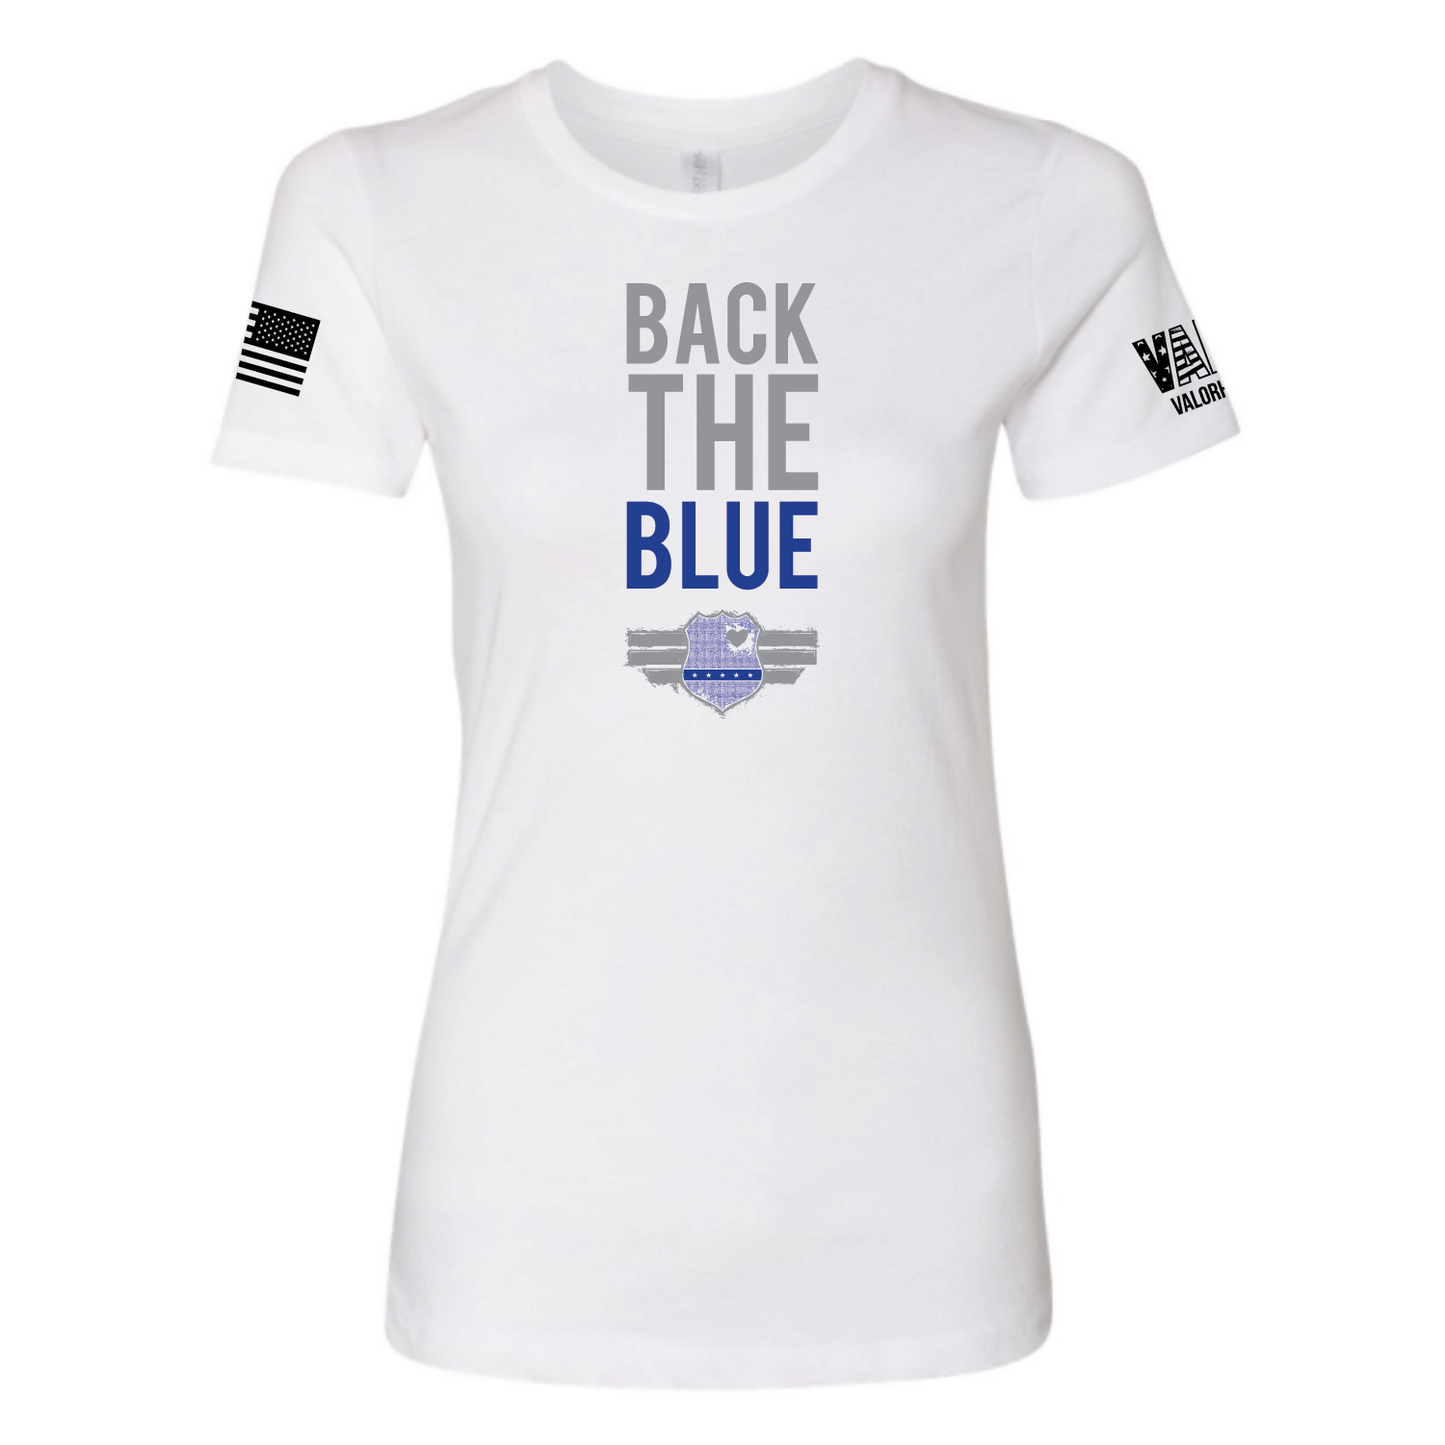 Ladies "Back the Blue" Shirt